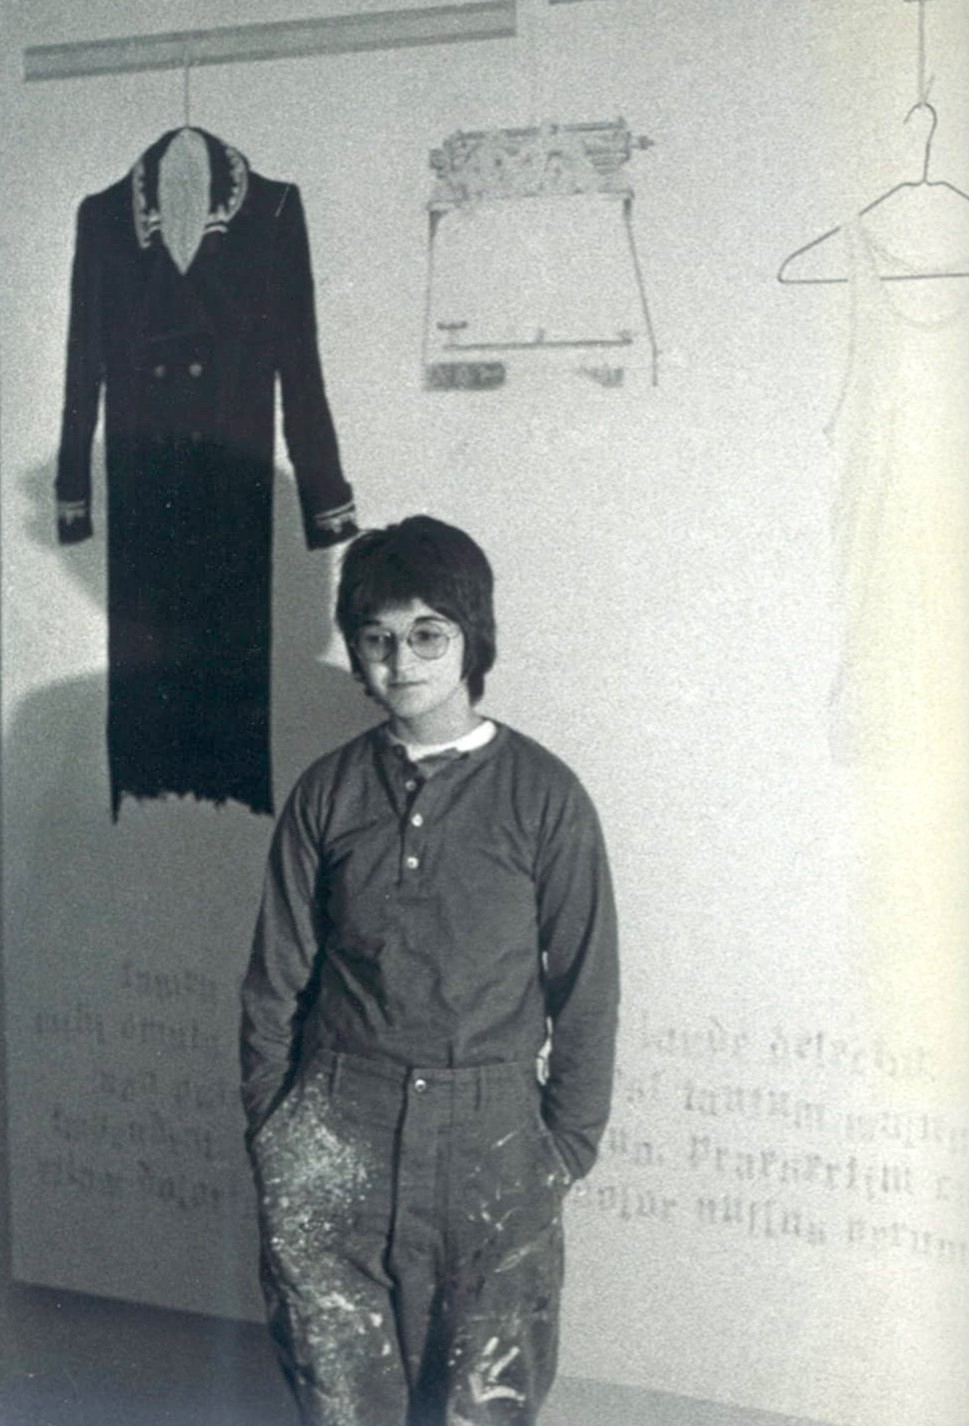 Michela in her studio, Chinatown, New York, NY, 1975. Photo courtesy of Michela Griffo.